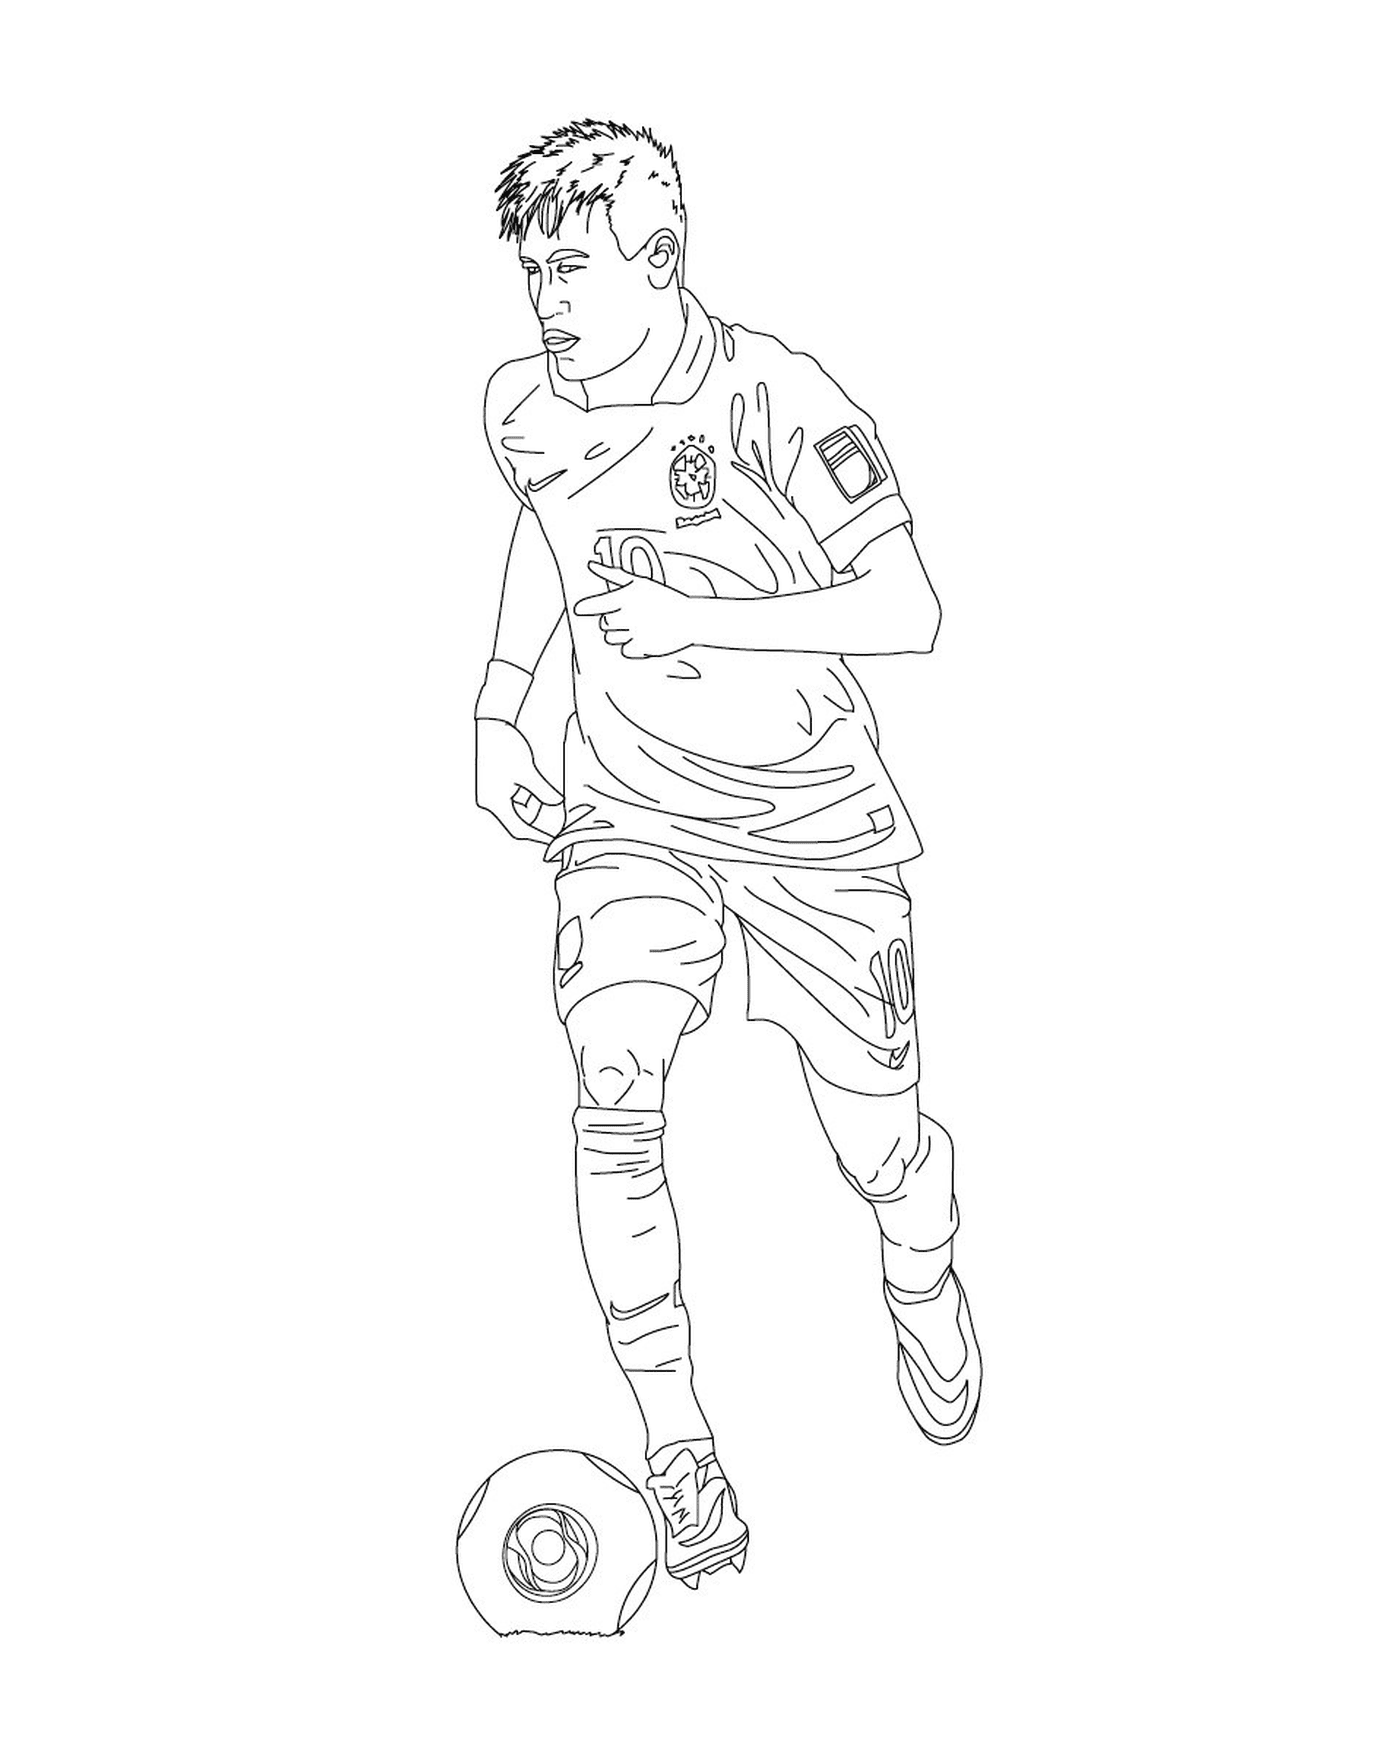  Un uomo che gioca a calcio, Neymar 